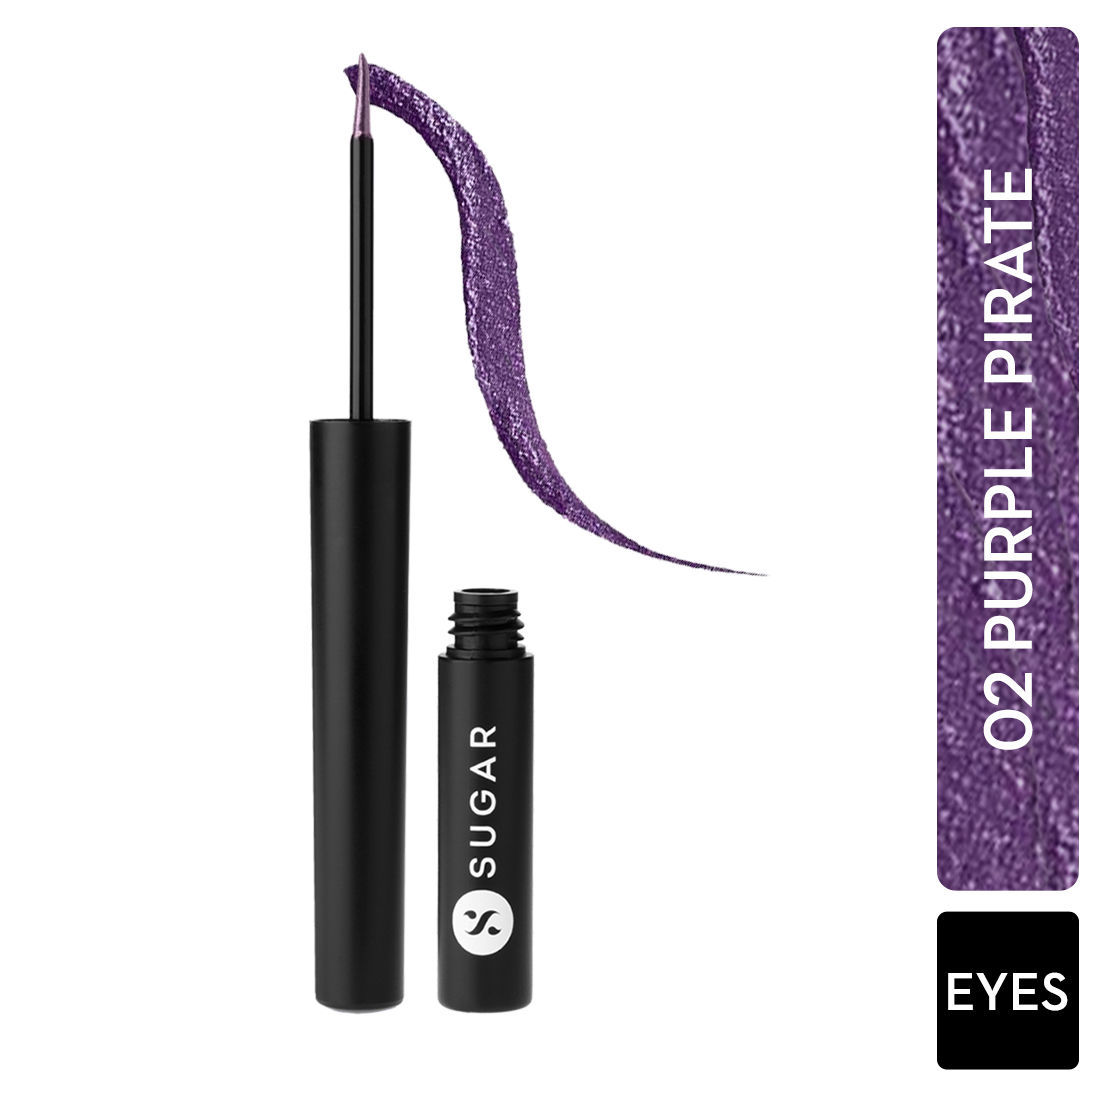 Buy SUGAR Cosmetics Eye Dared You So! Metallic Eyeliner - 02 Purple Pirate (Metallic Purple) - Purplle